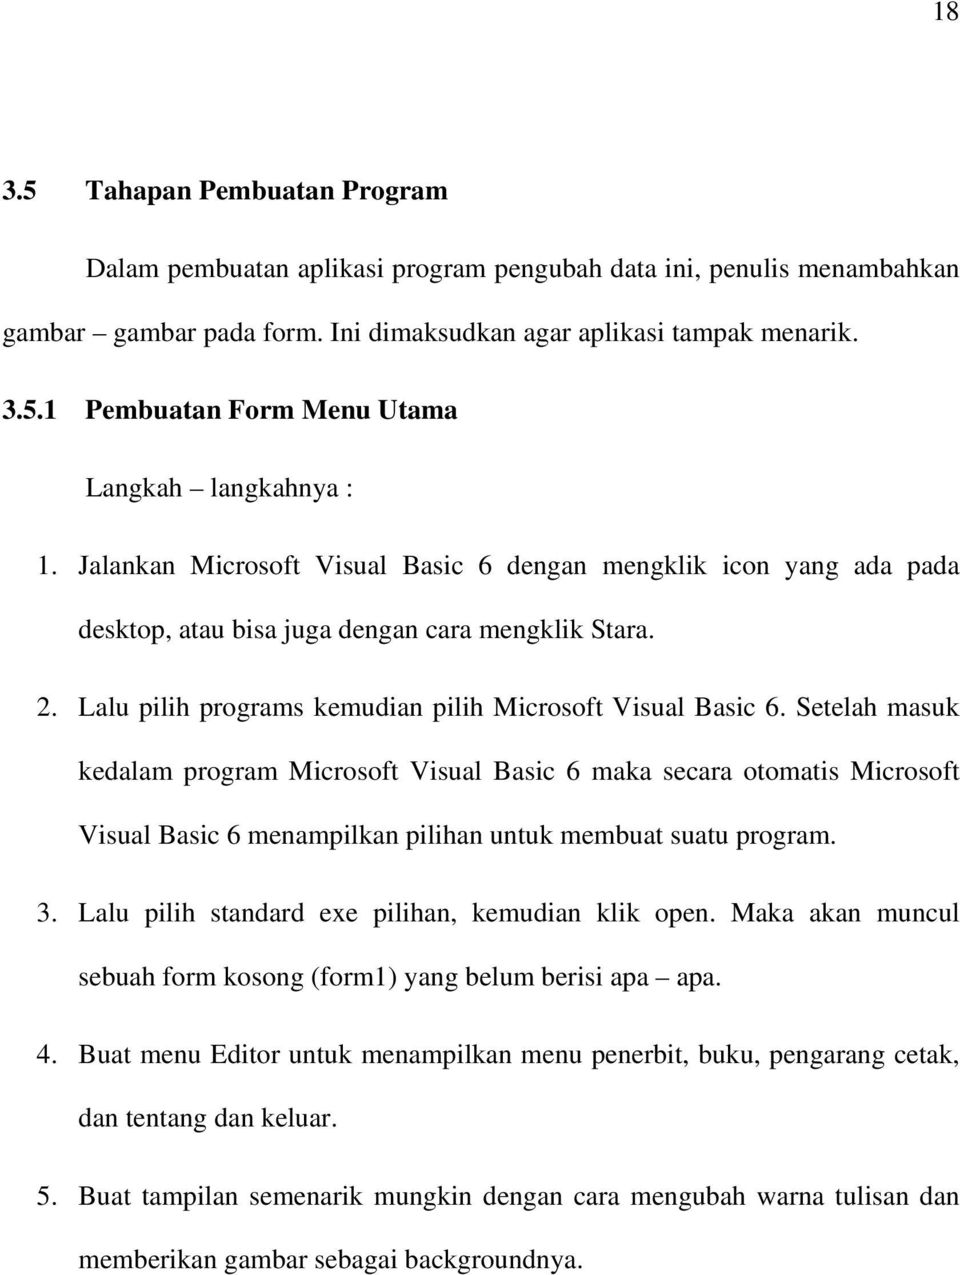 Setelah masuk kedalam program Microsoft Visual Basic 6 maka secara otomatis Microsoft Visual Basic 6 menampilkan pilihan untuk membuat suatu program. 3.